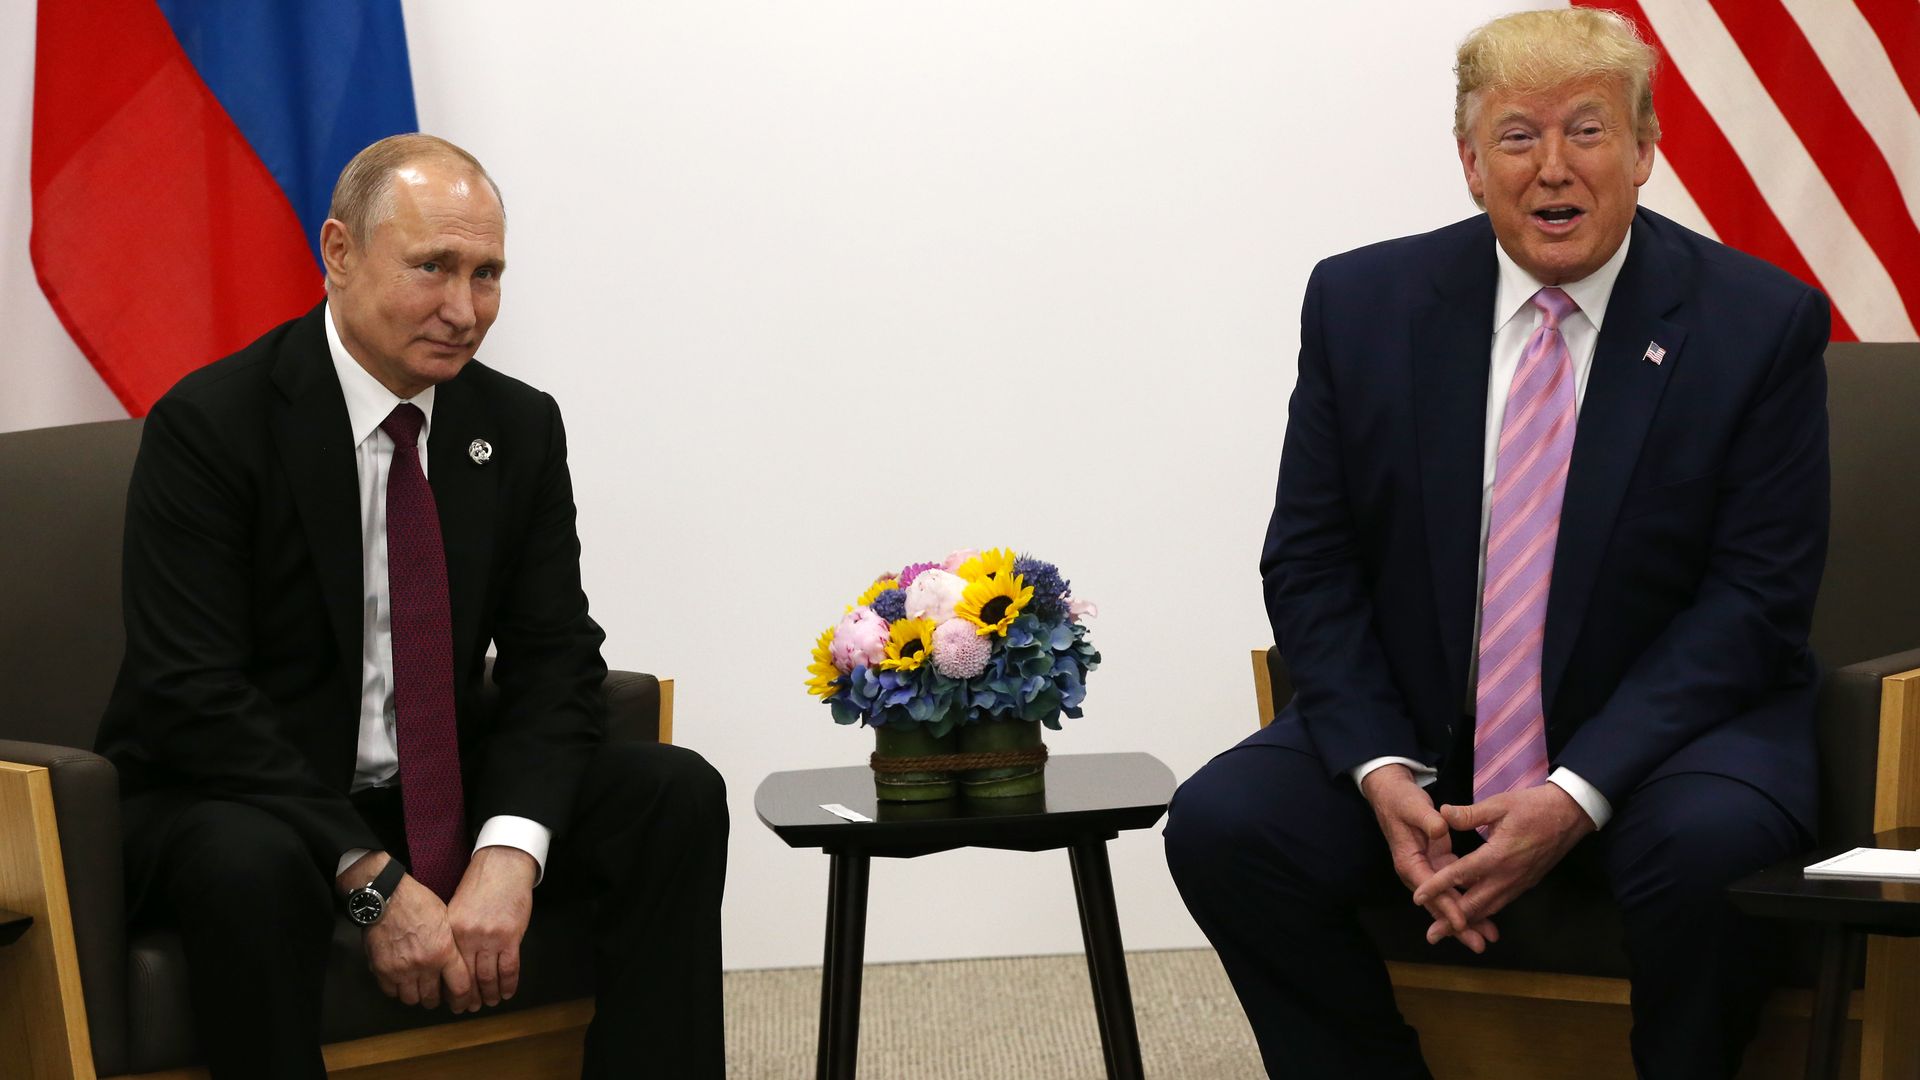 Trump with Putin